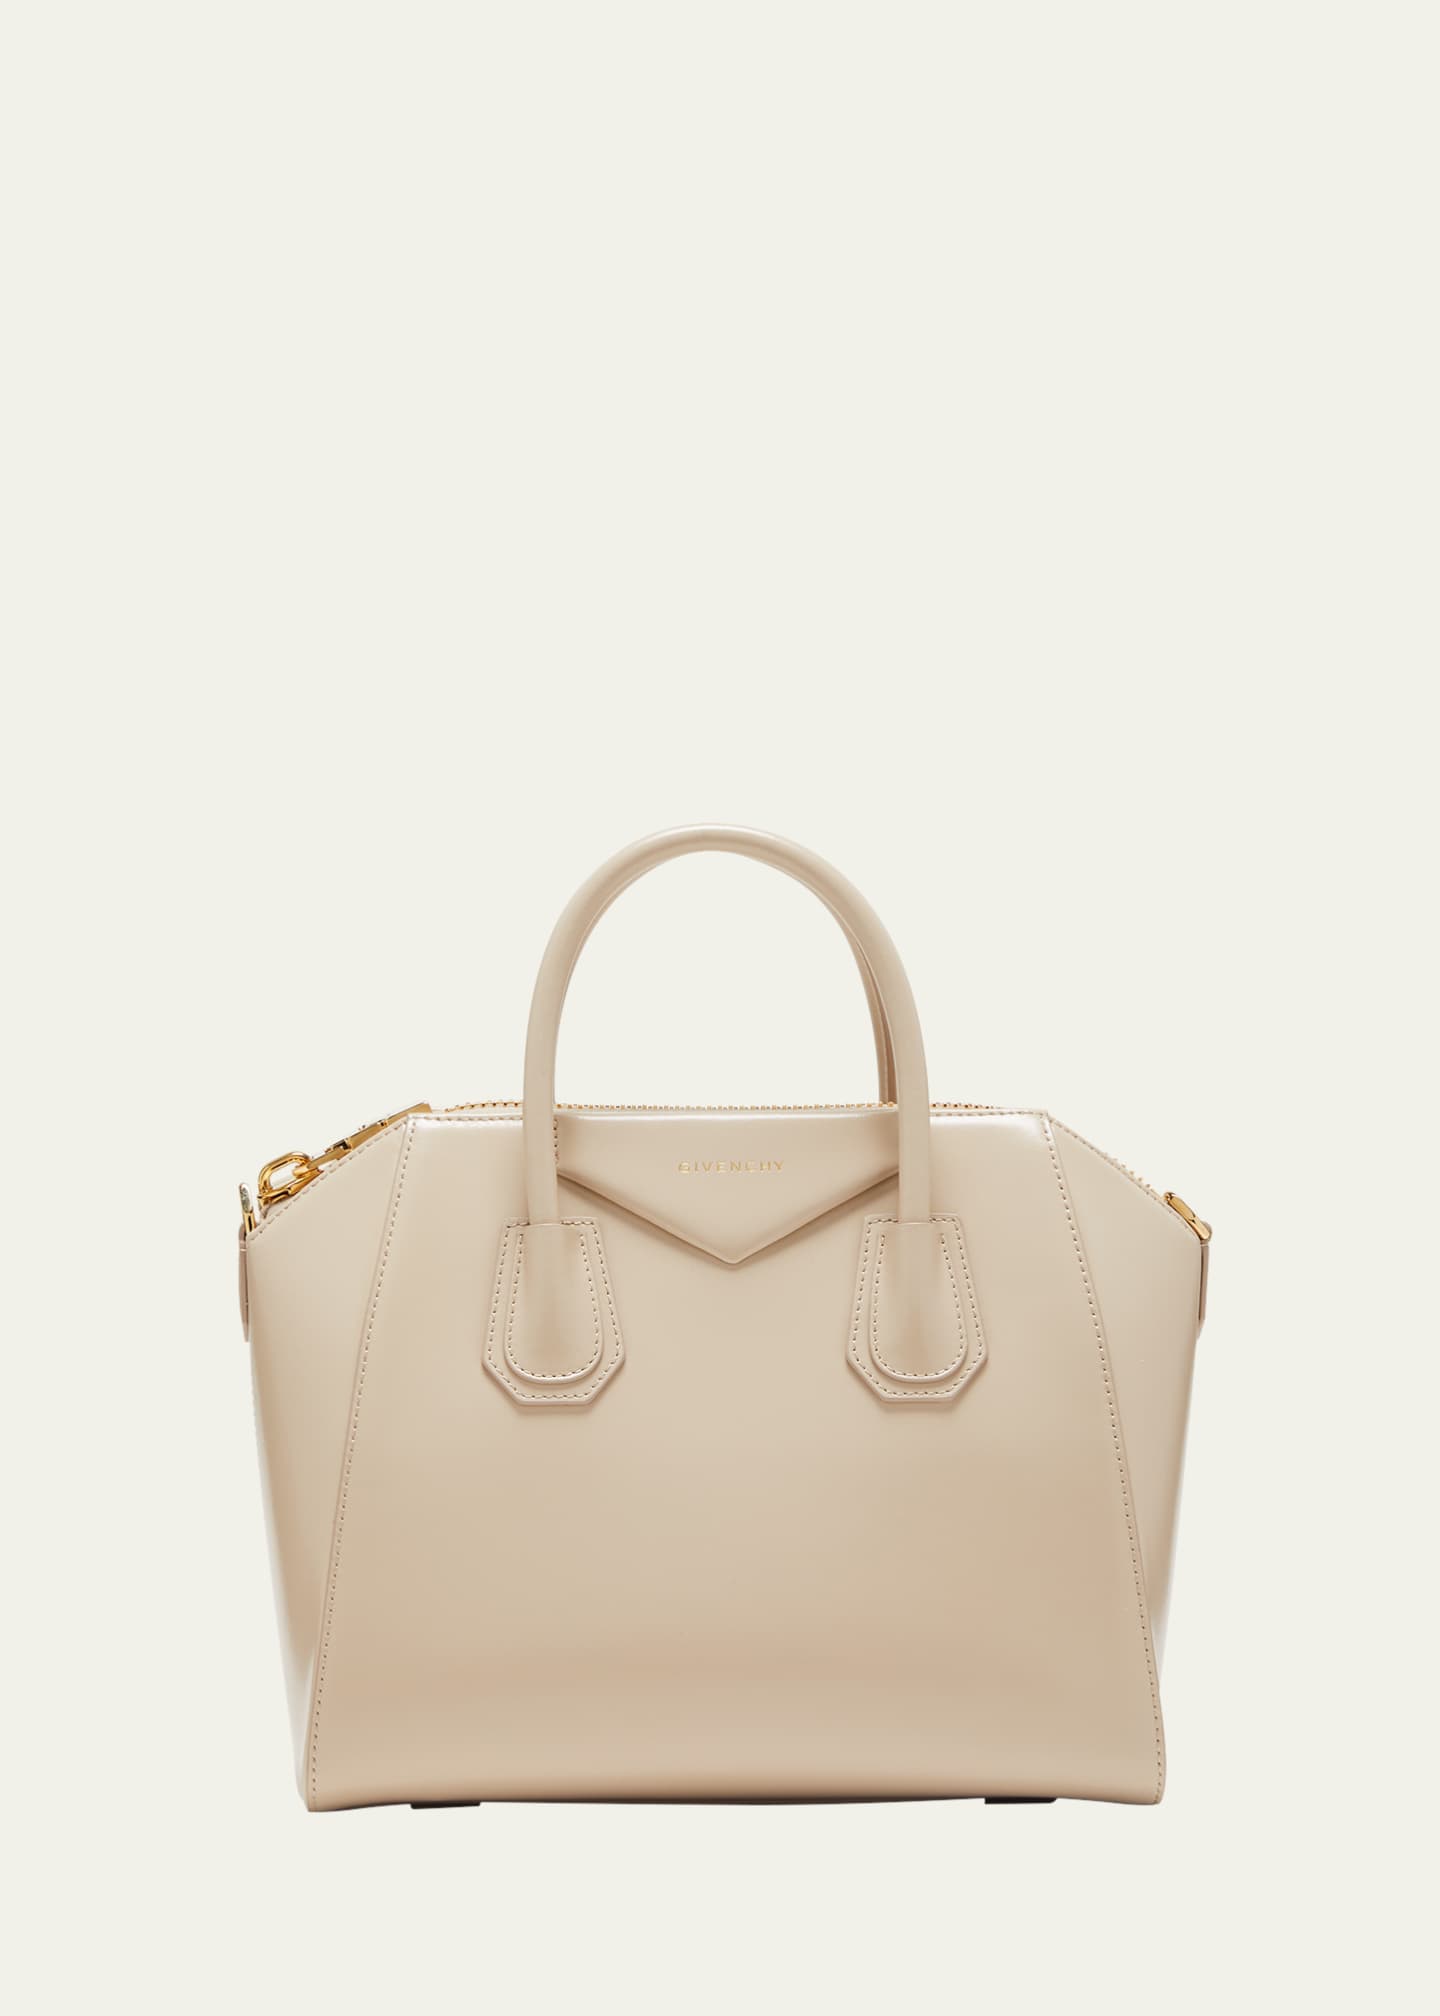 Givenchy Small Antigona Top-Handle Bag in Box Leather